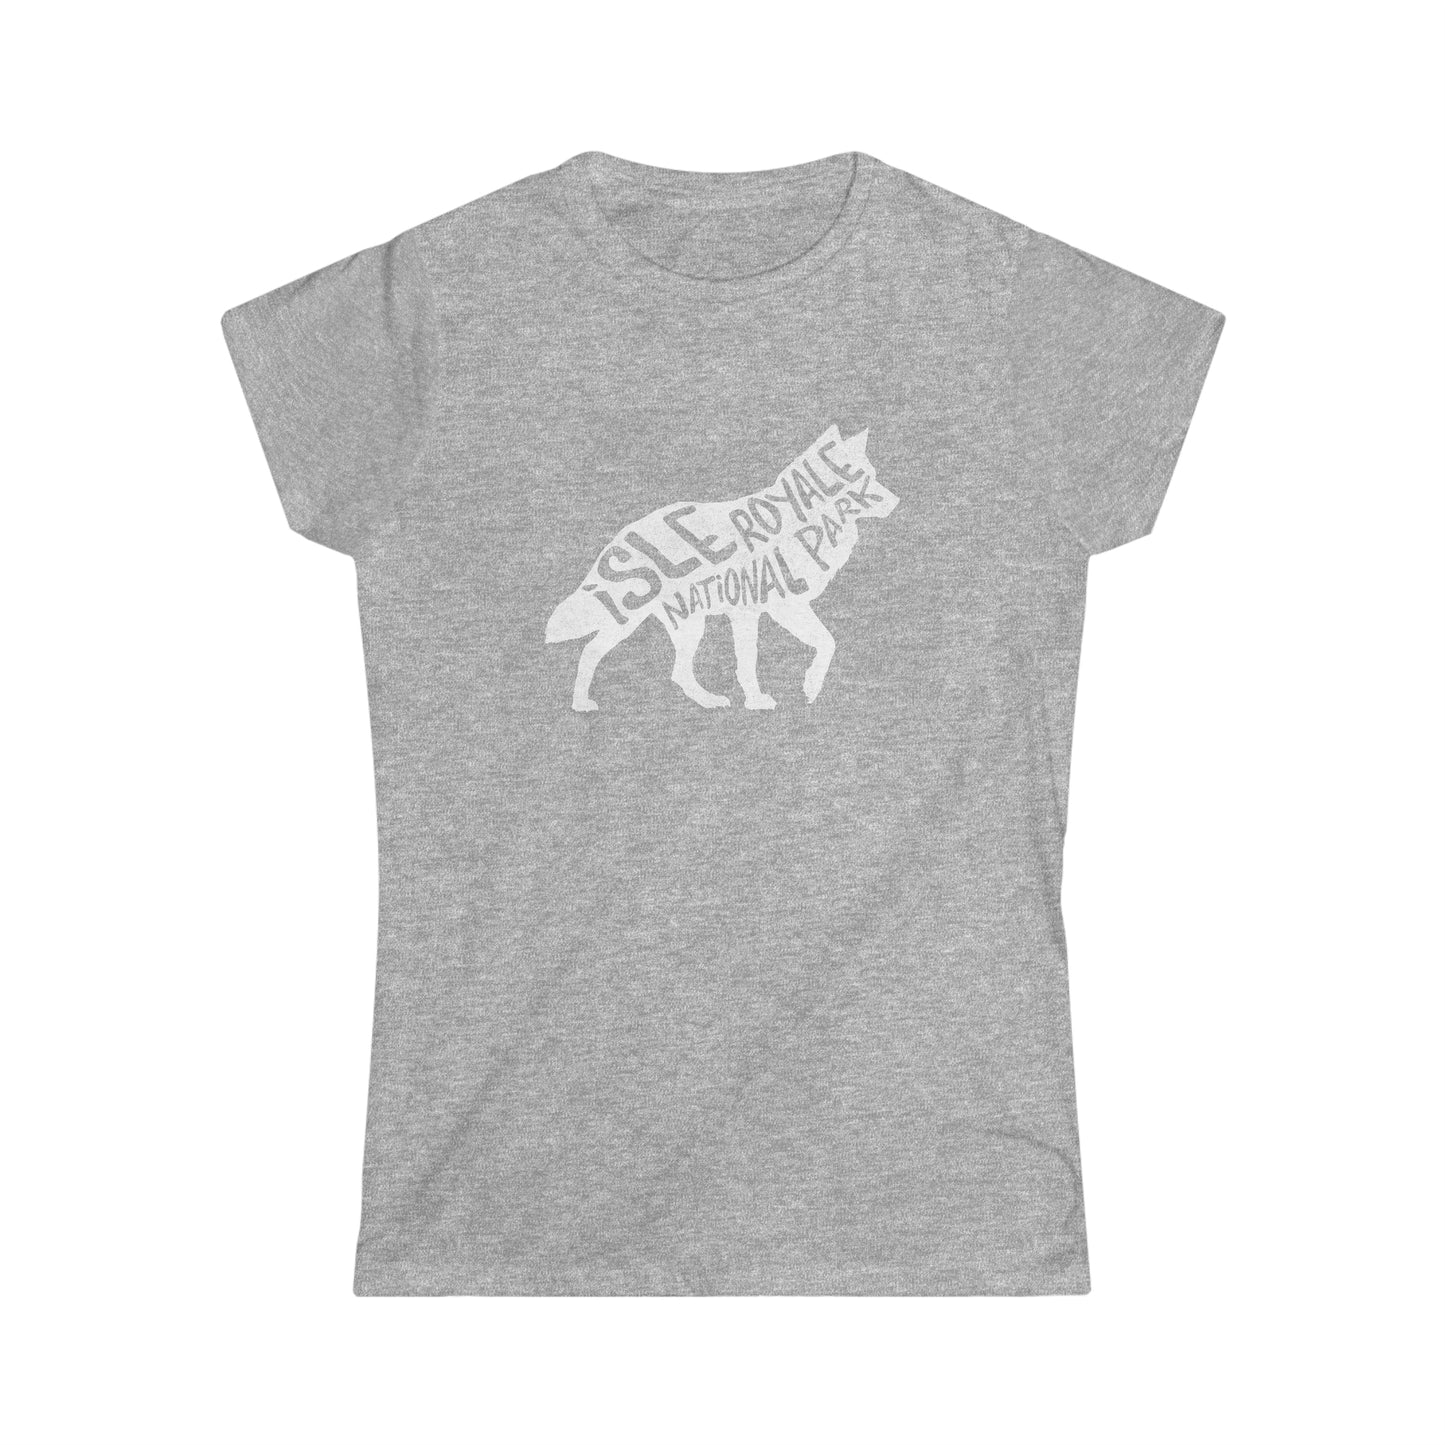 Isle Royale National Park Women's T-Shirt - Wolf